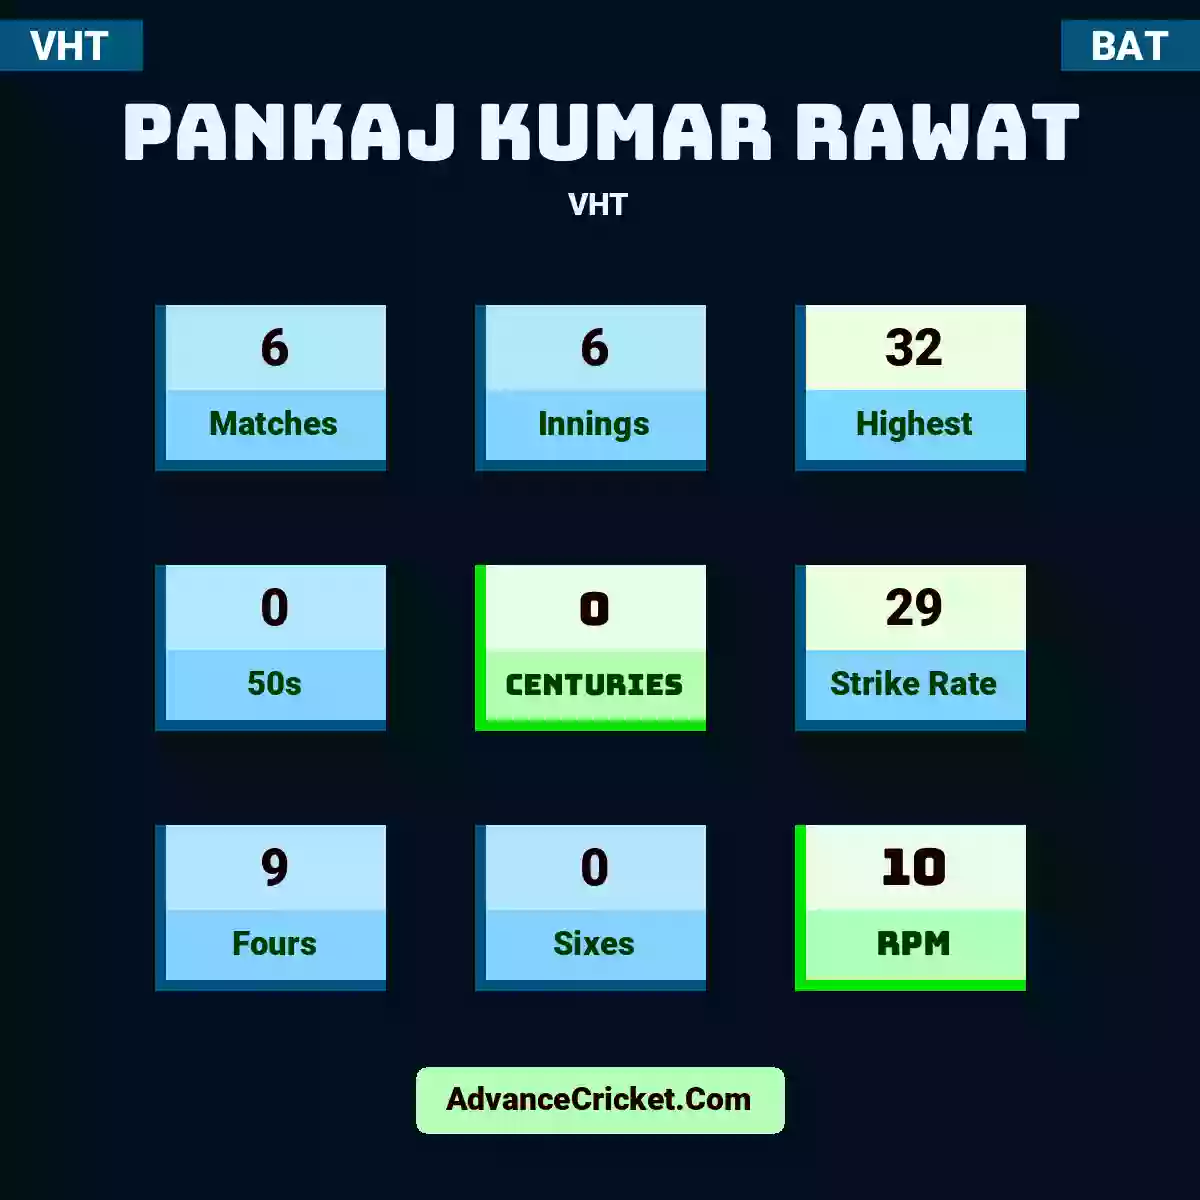 Pankaj Kumar Rawat VHT , Pankaj Kumar Rawat played 6 matches, scored 32 runs as highest, 0 half-centuries, and 0 centuries, with a strike rate of 29. P.Rawat hit 9 fours and 0 sixes, with an RPM of 10.